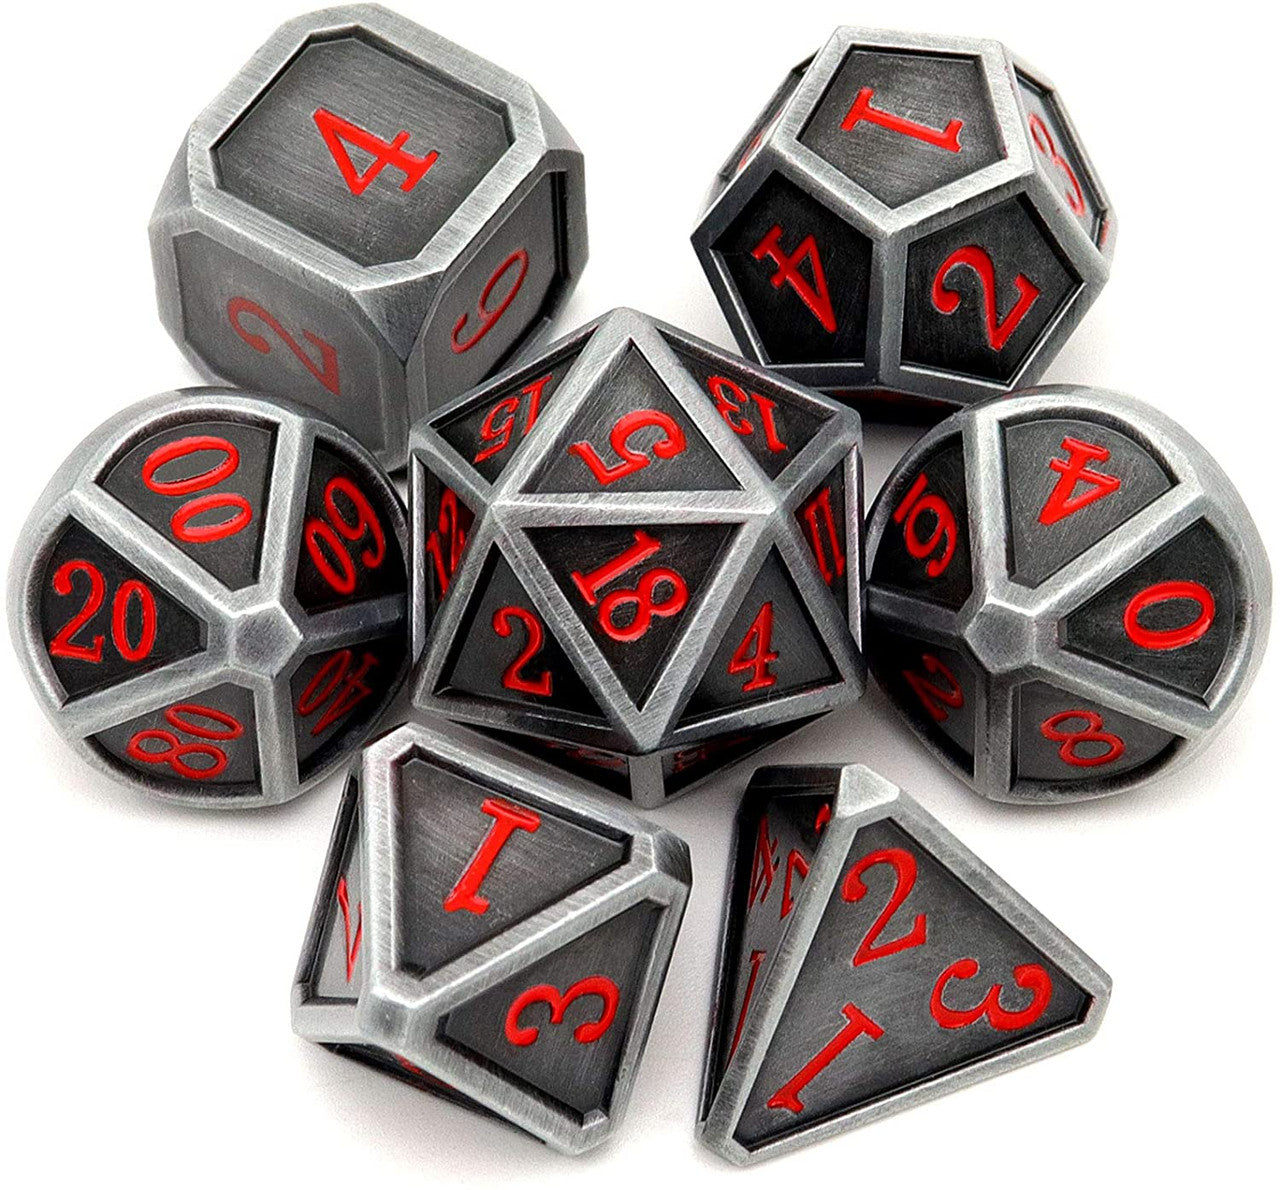 metal dice
dnd dice
dungeons and dragons dice
polyhedral dice
d d dice
dragon dice
ancient dice
haxtec dice
